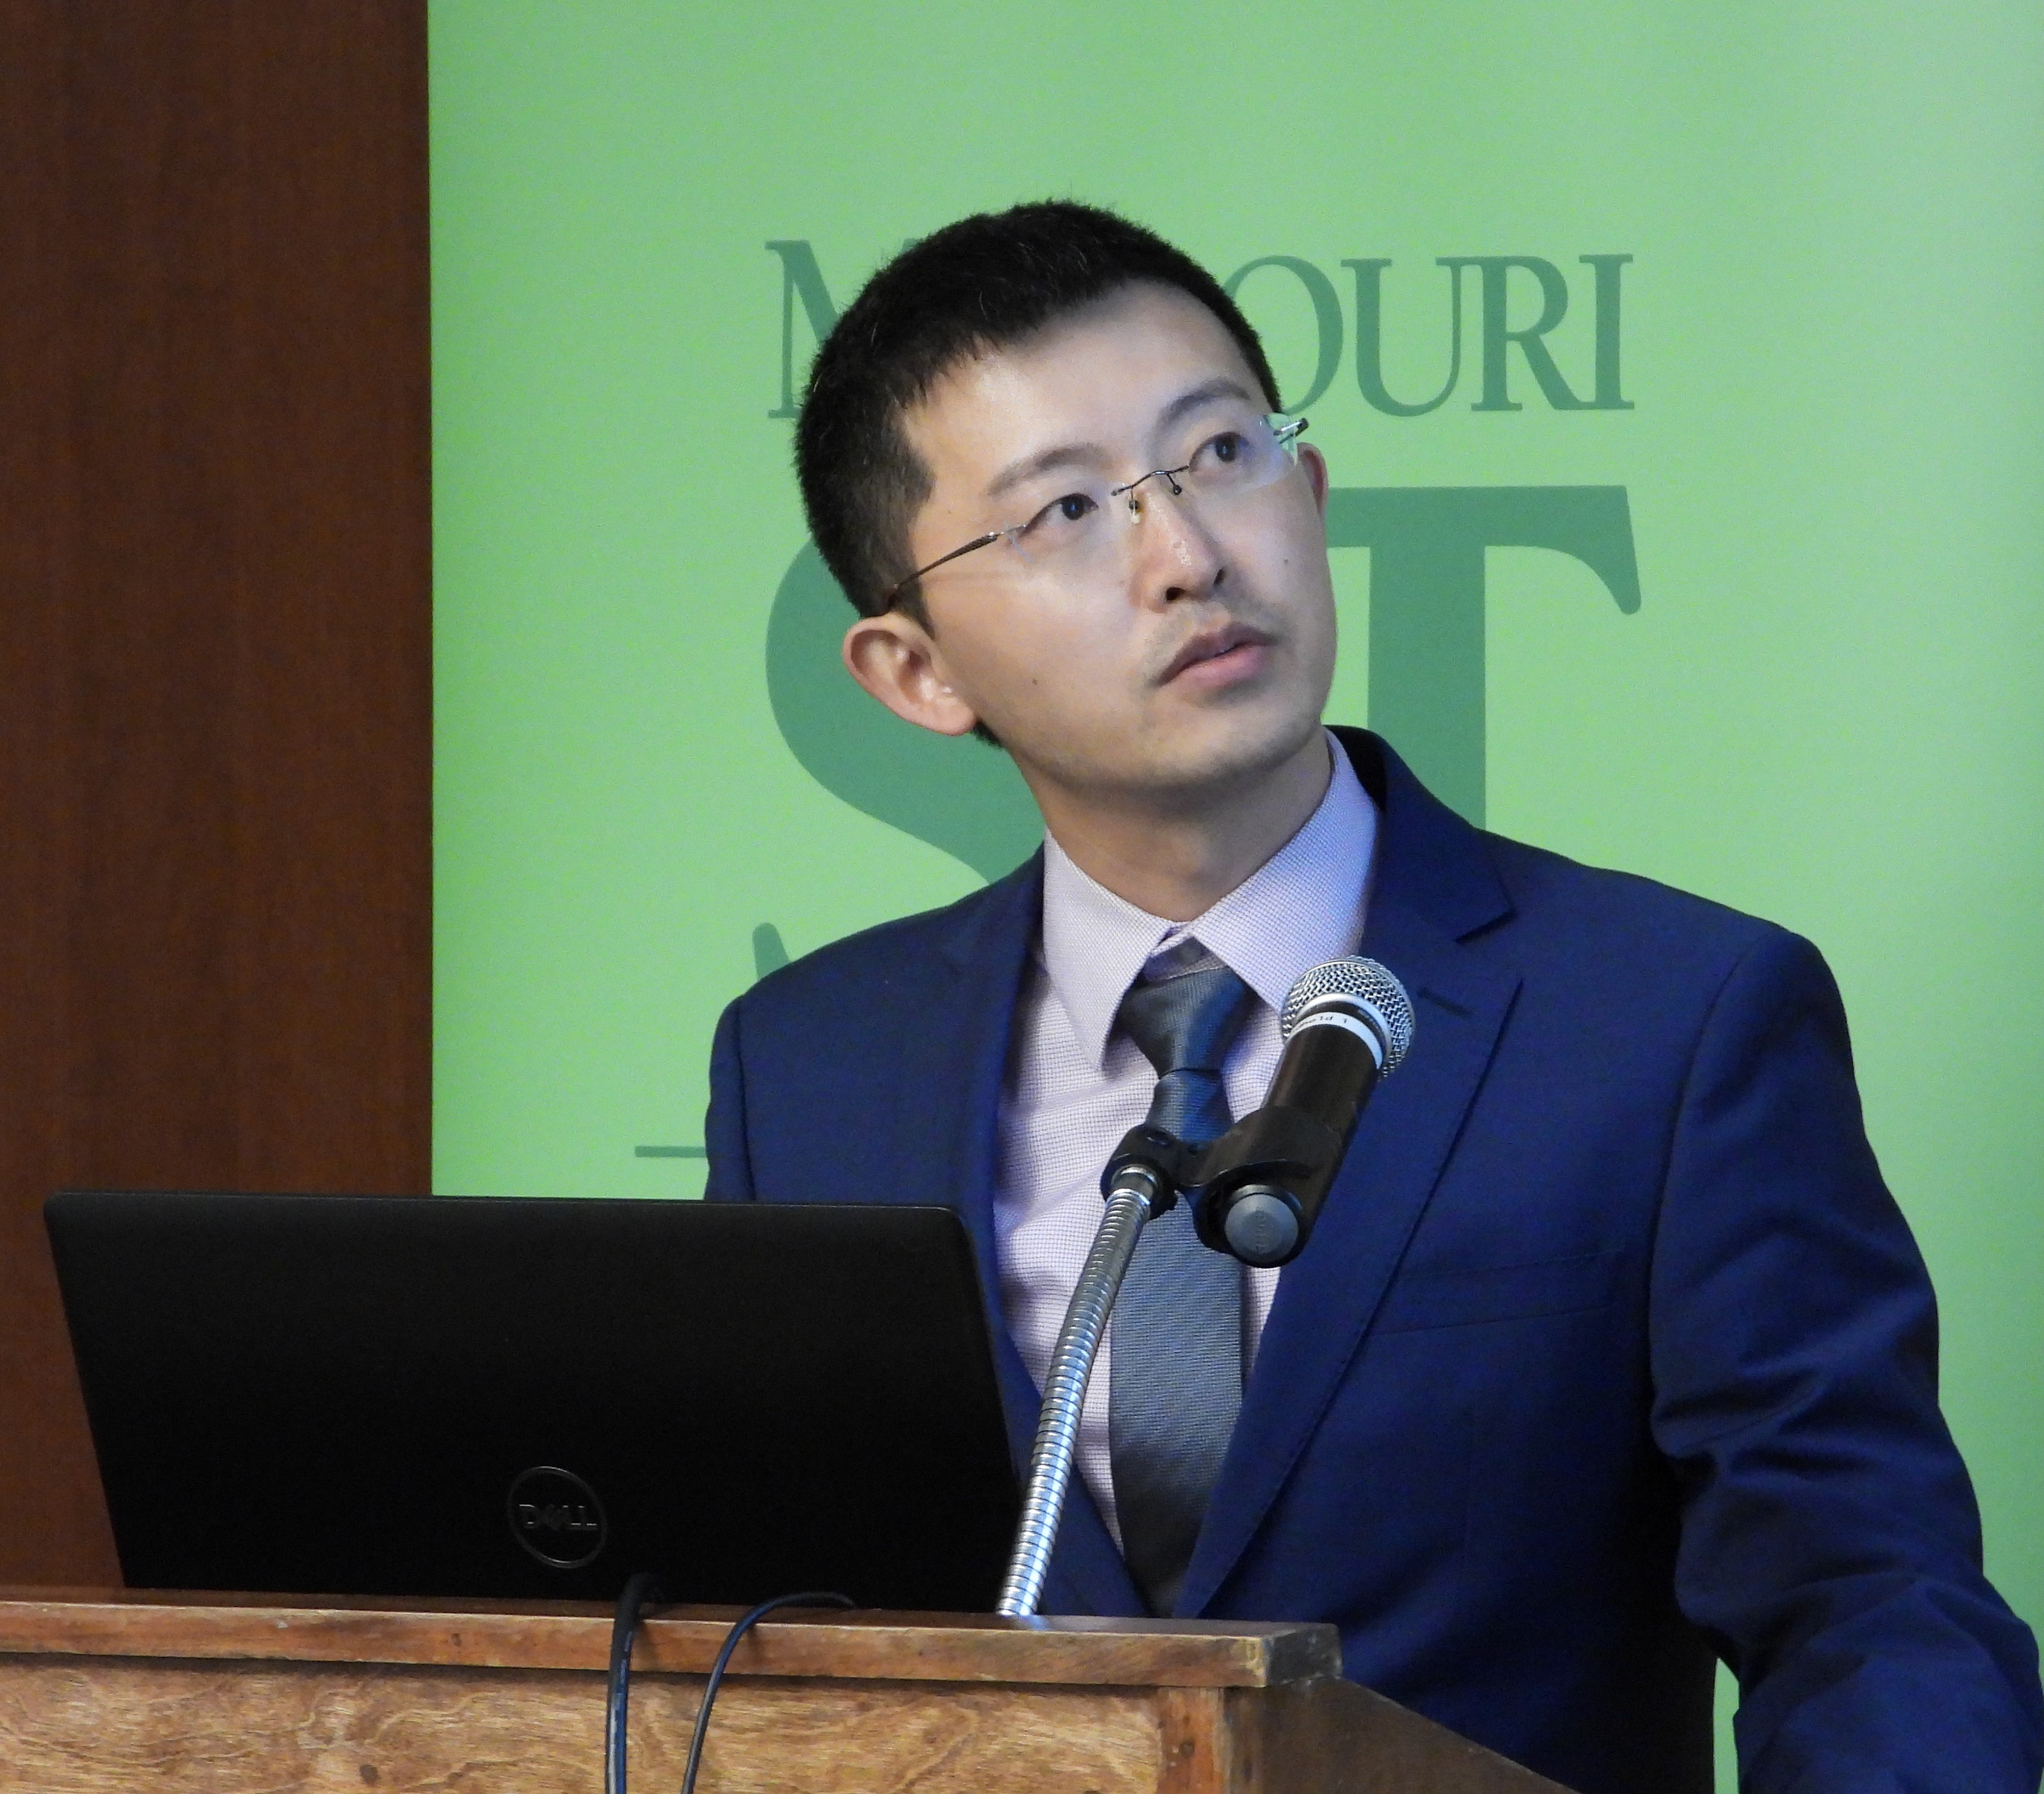 Second place recipient, Tao Liu, presenting behind a podium.